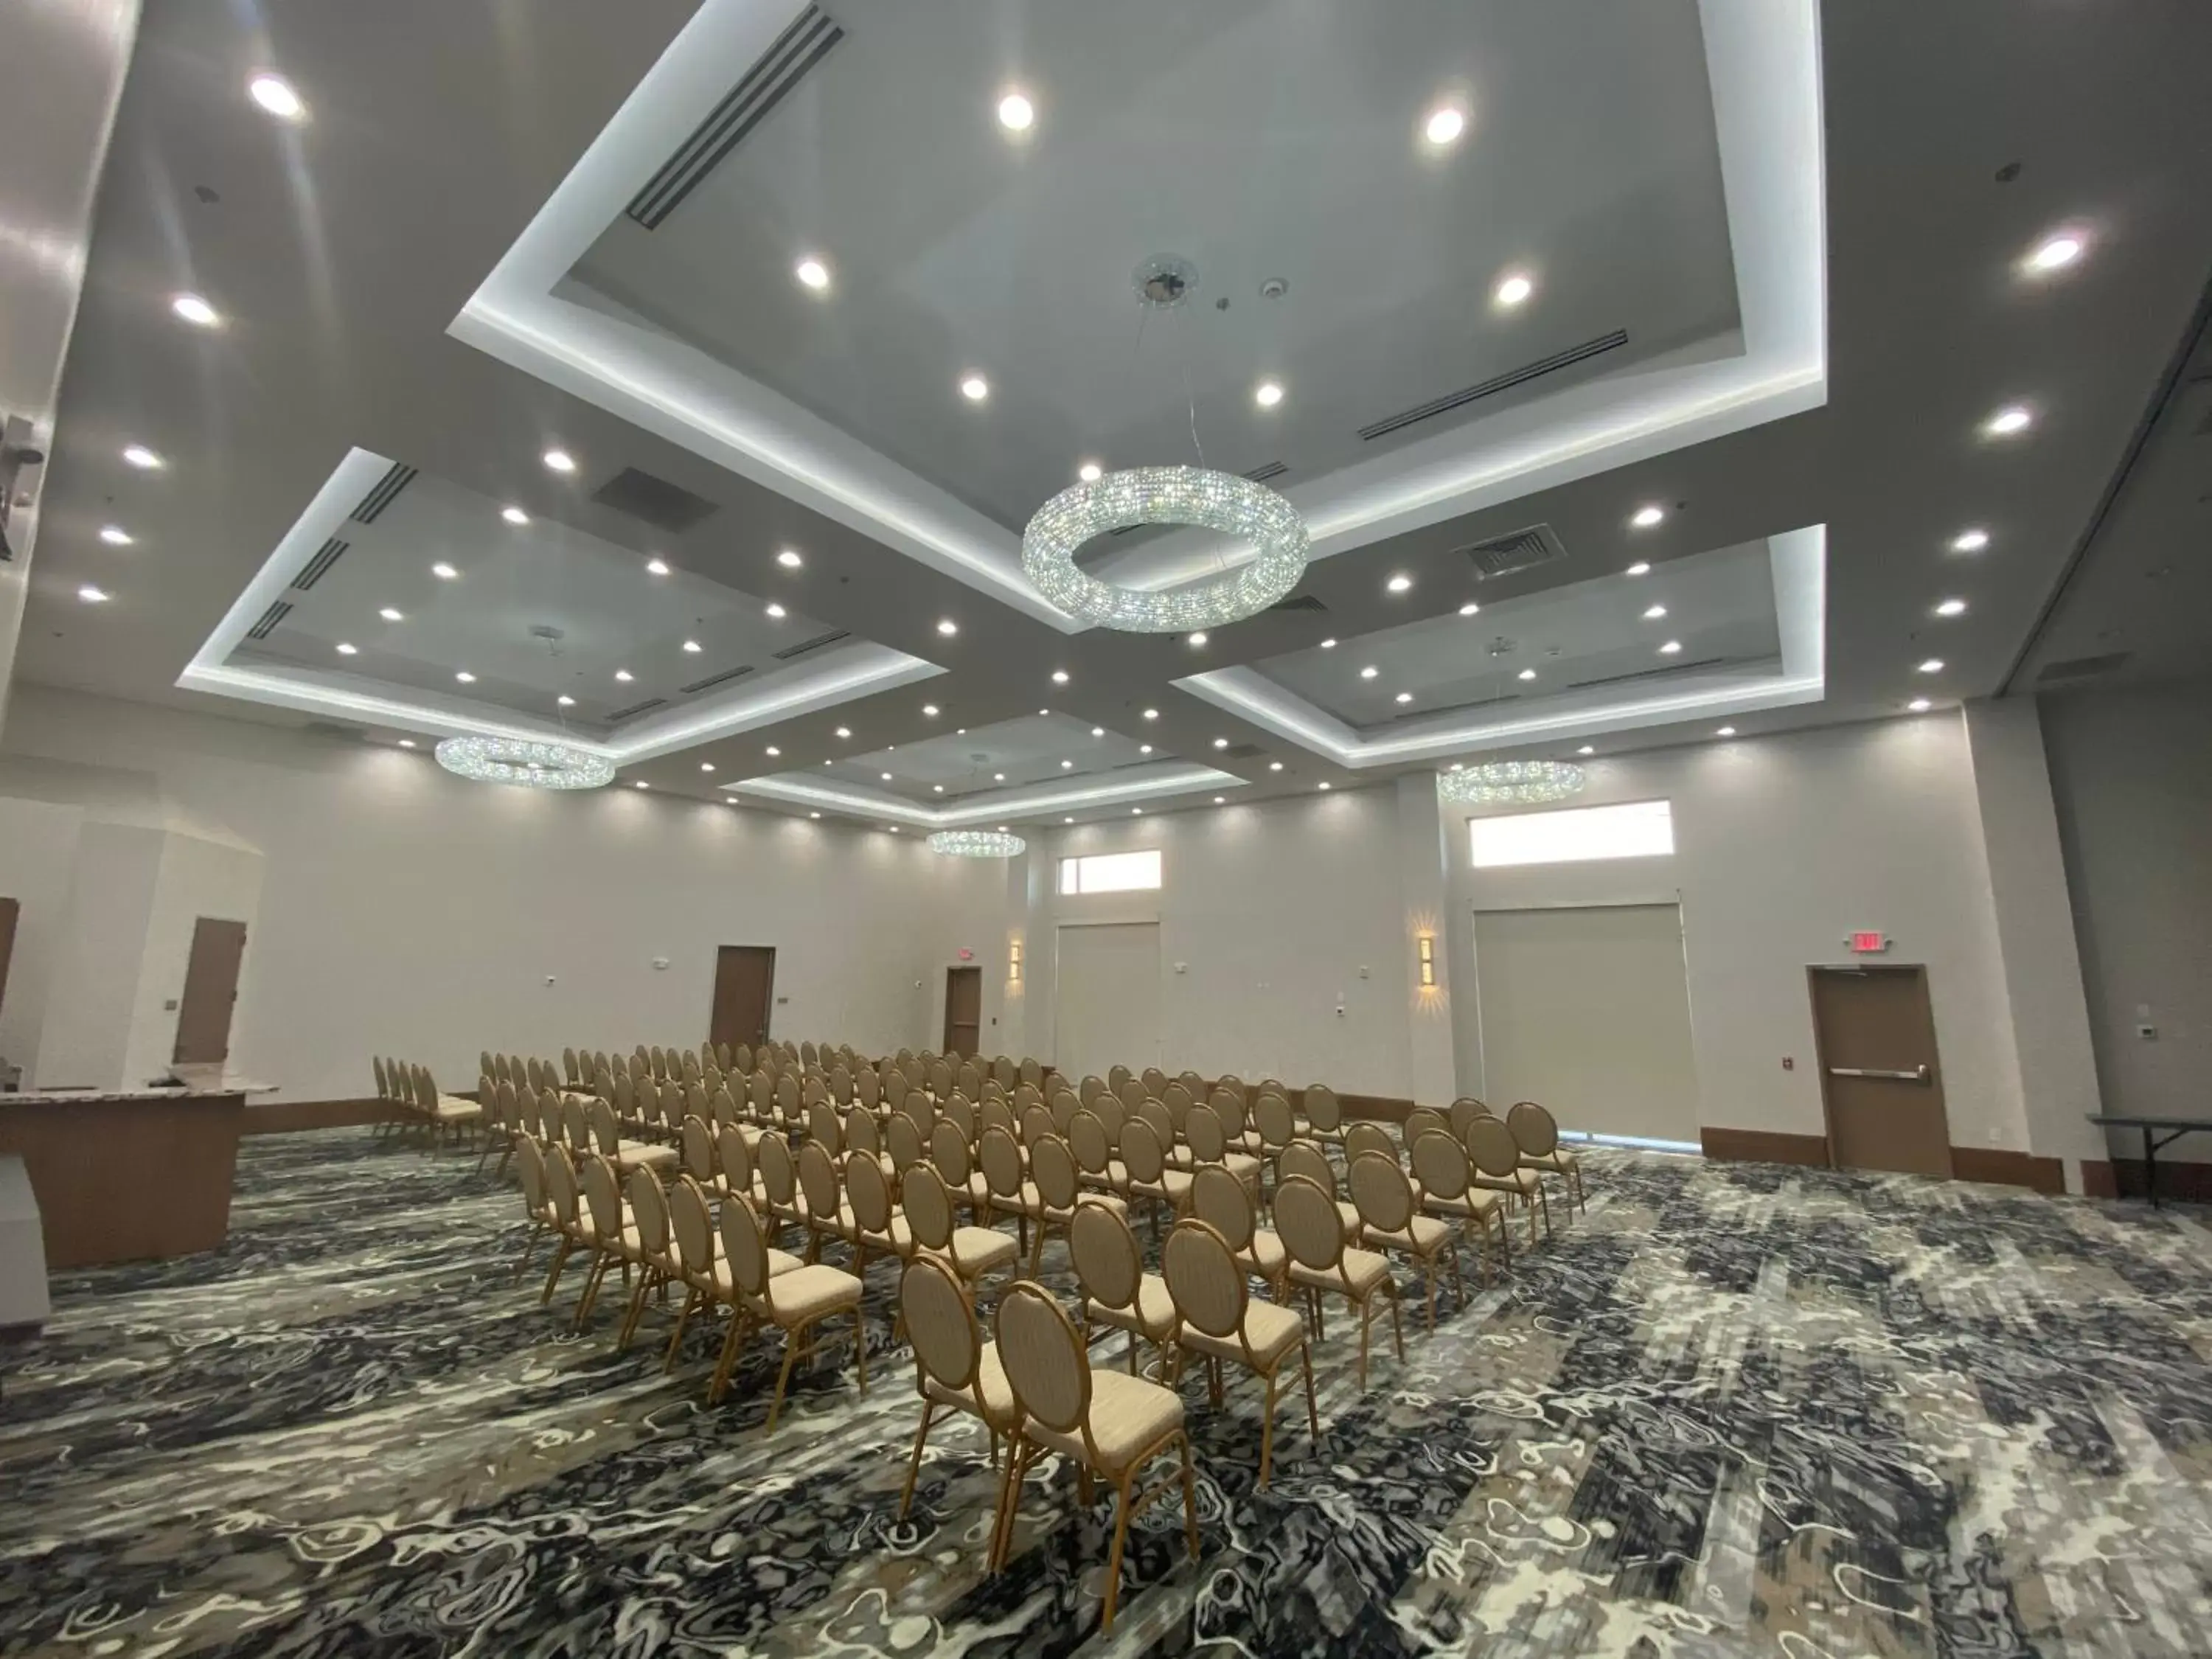 Banquet/Function facilities, Banquet Facilities in Tru By Hilton Katy Houston West, Tx